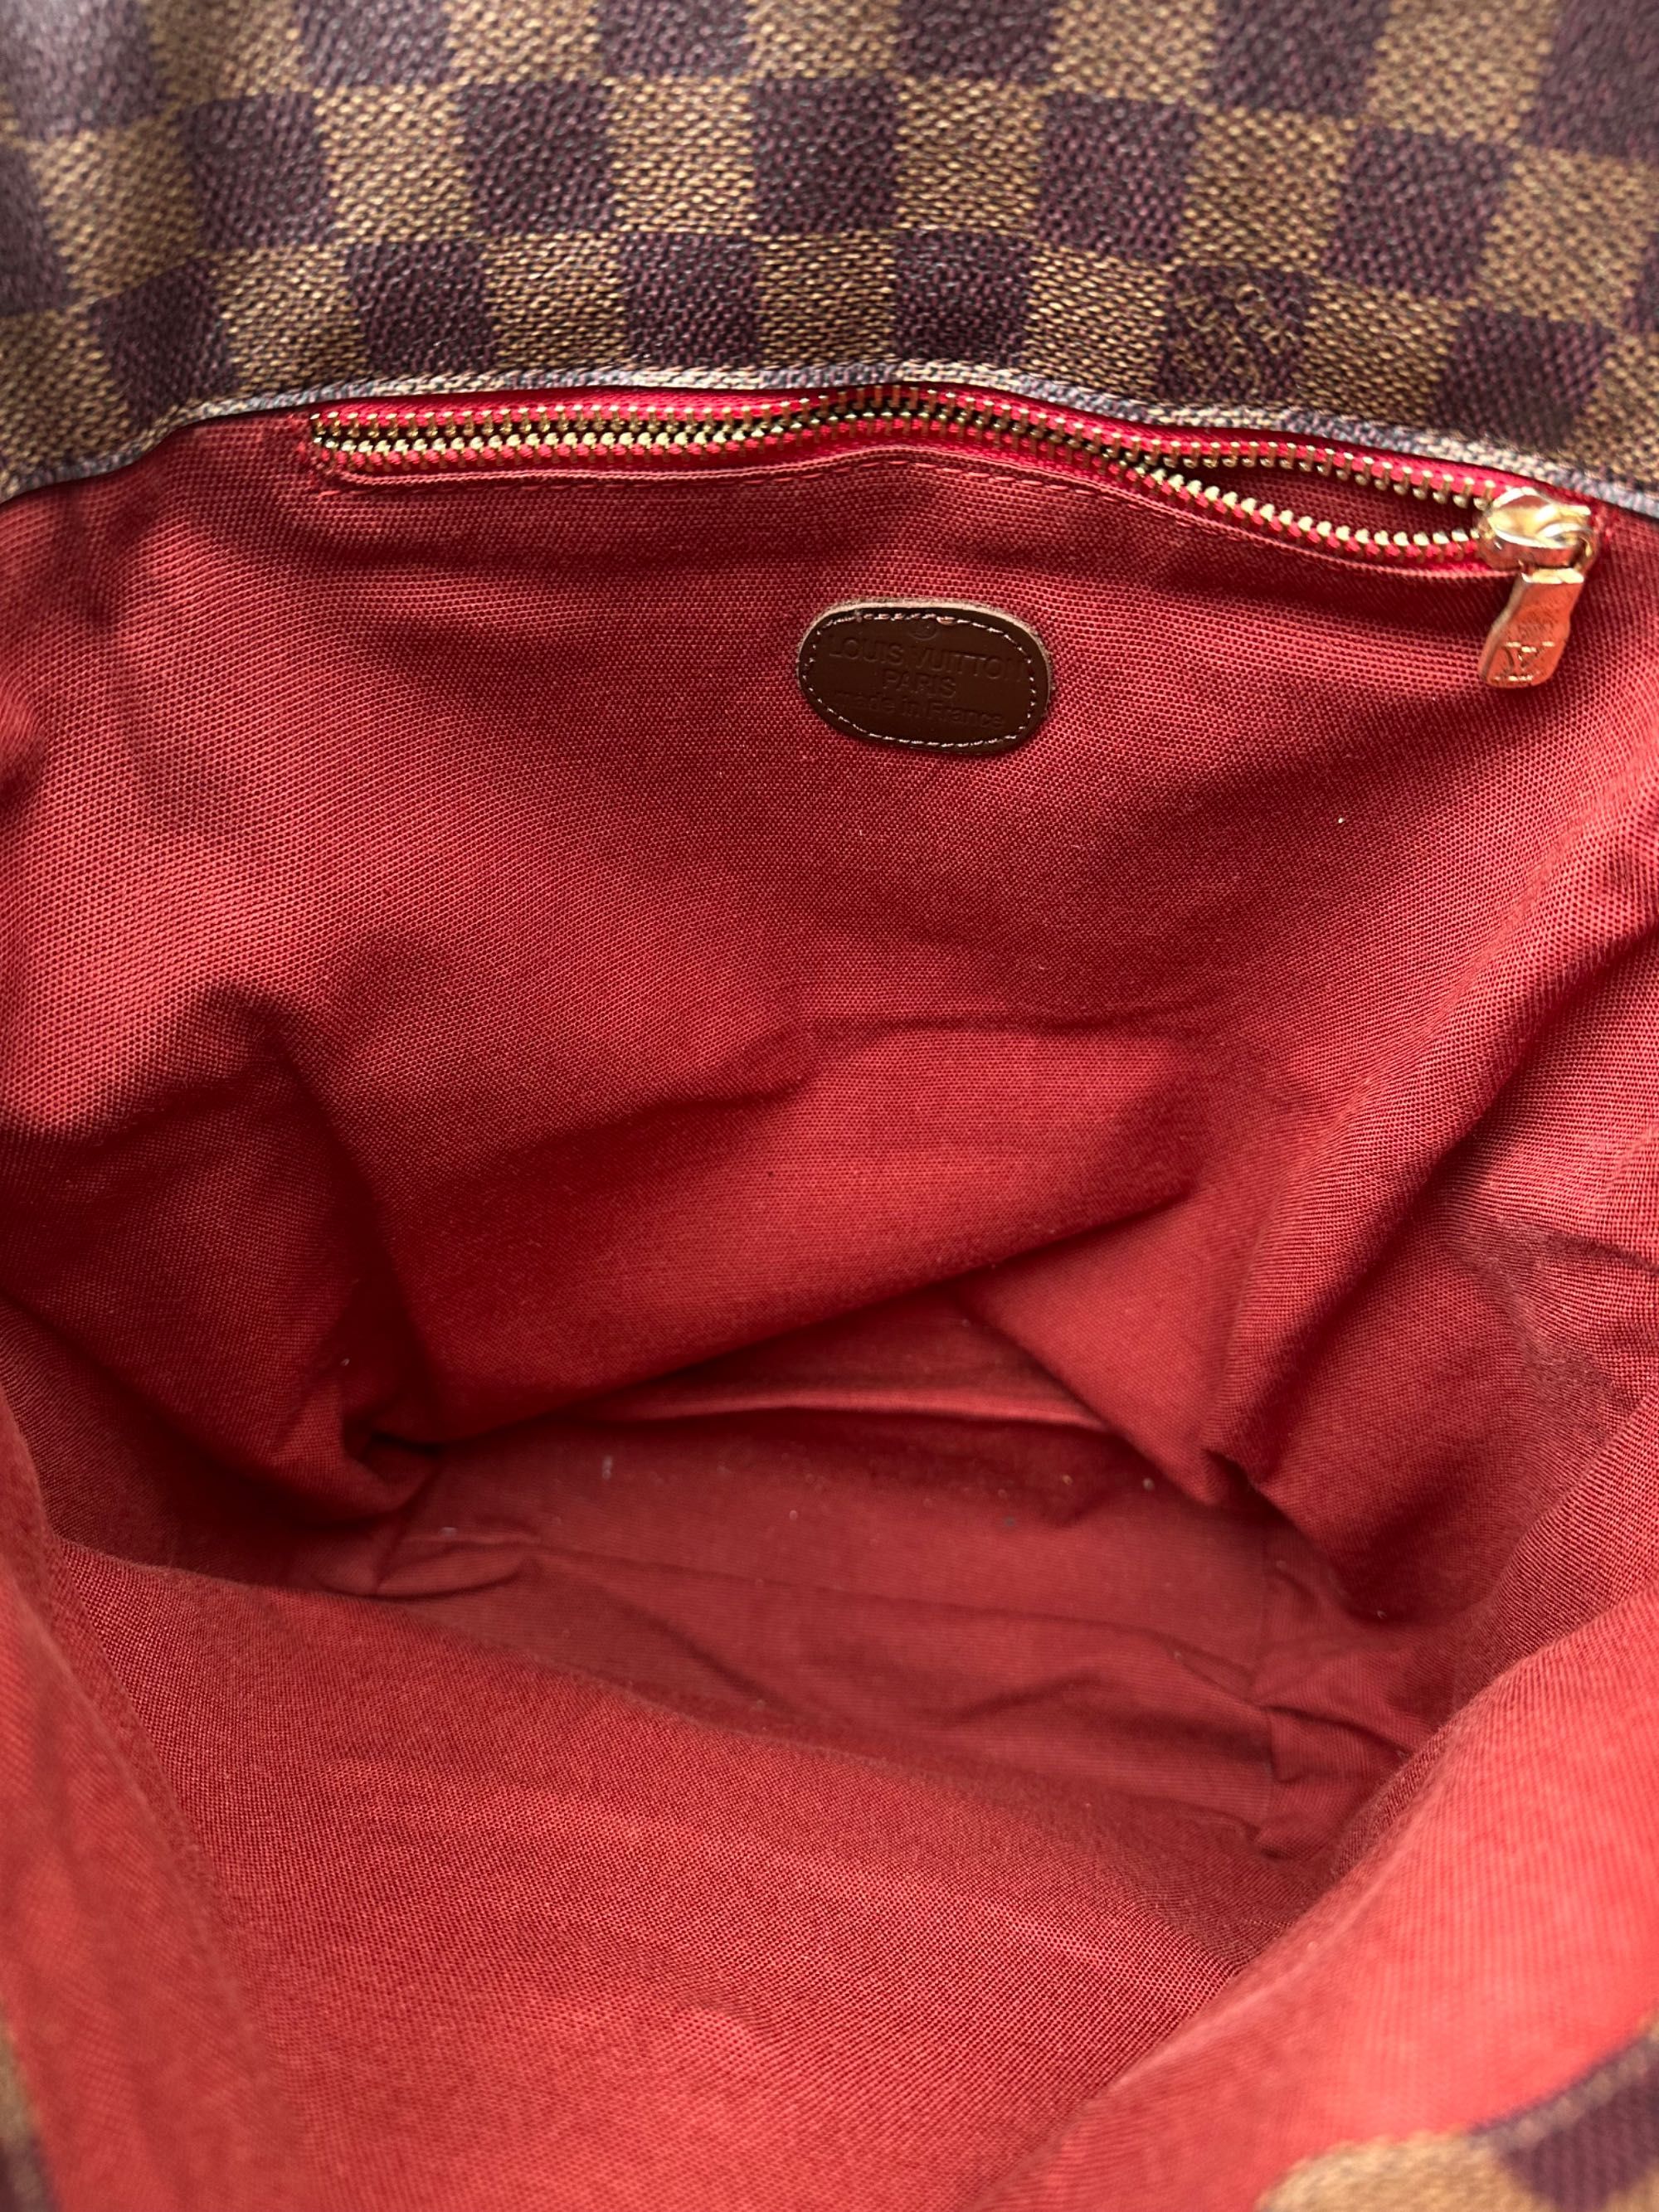 turecki plecak backpack from turkey